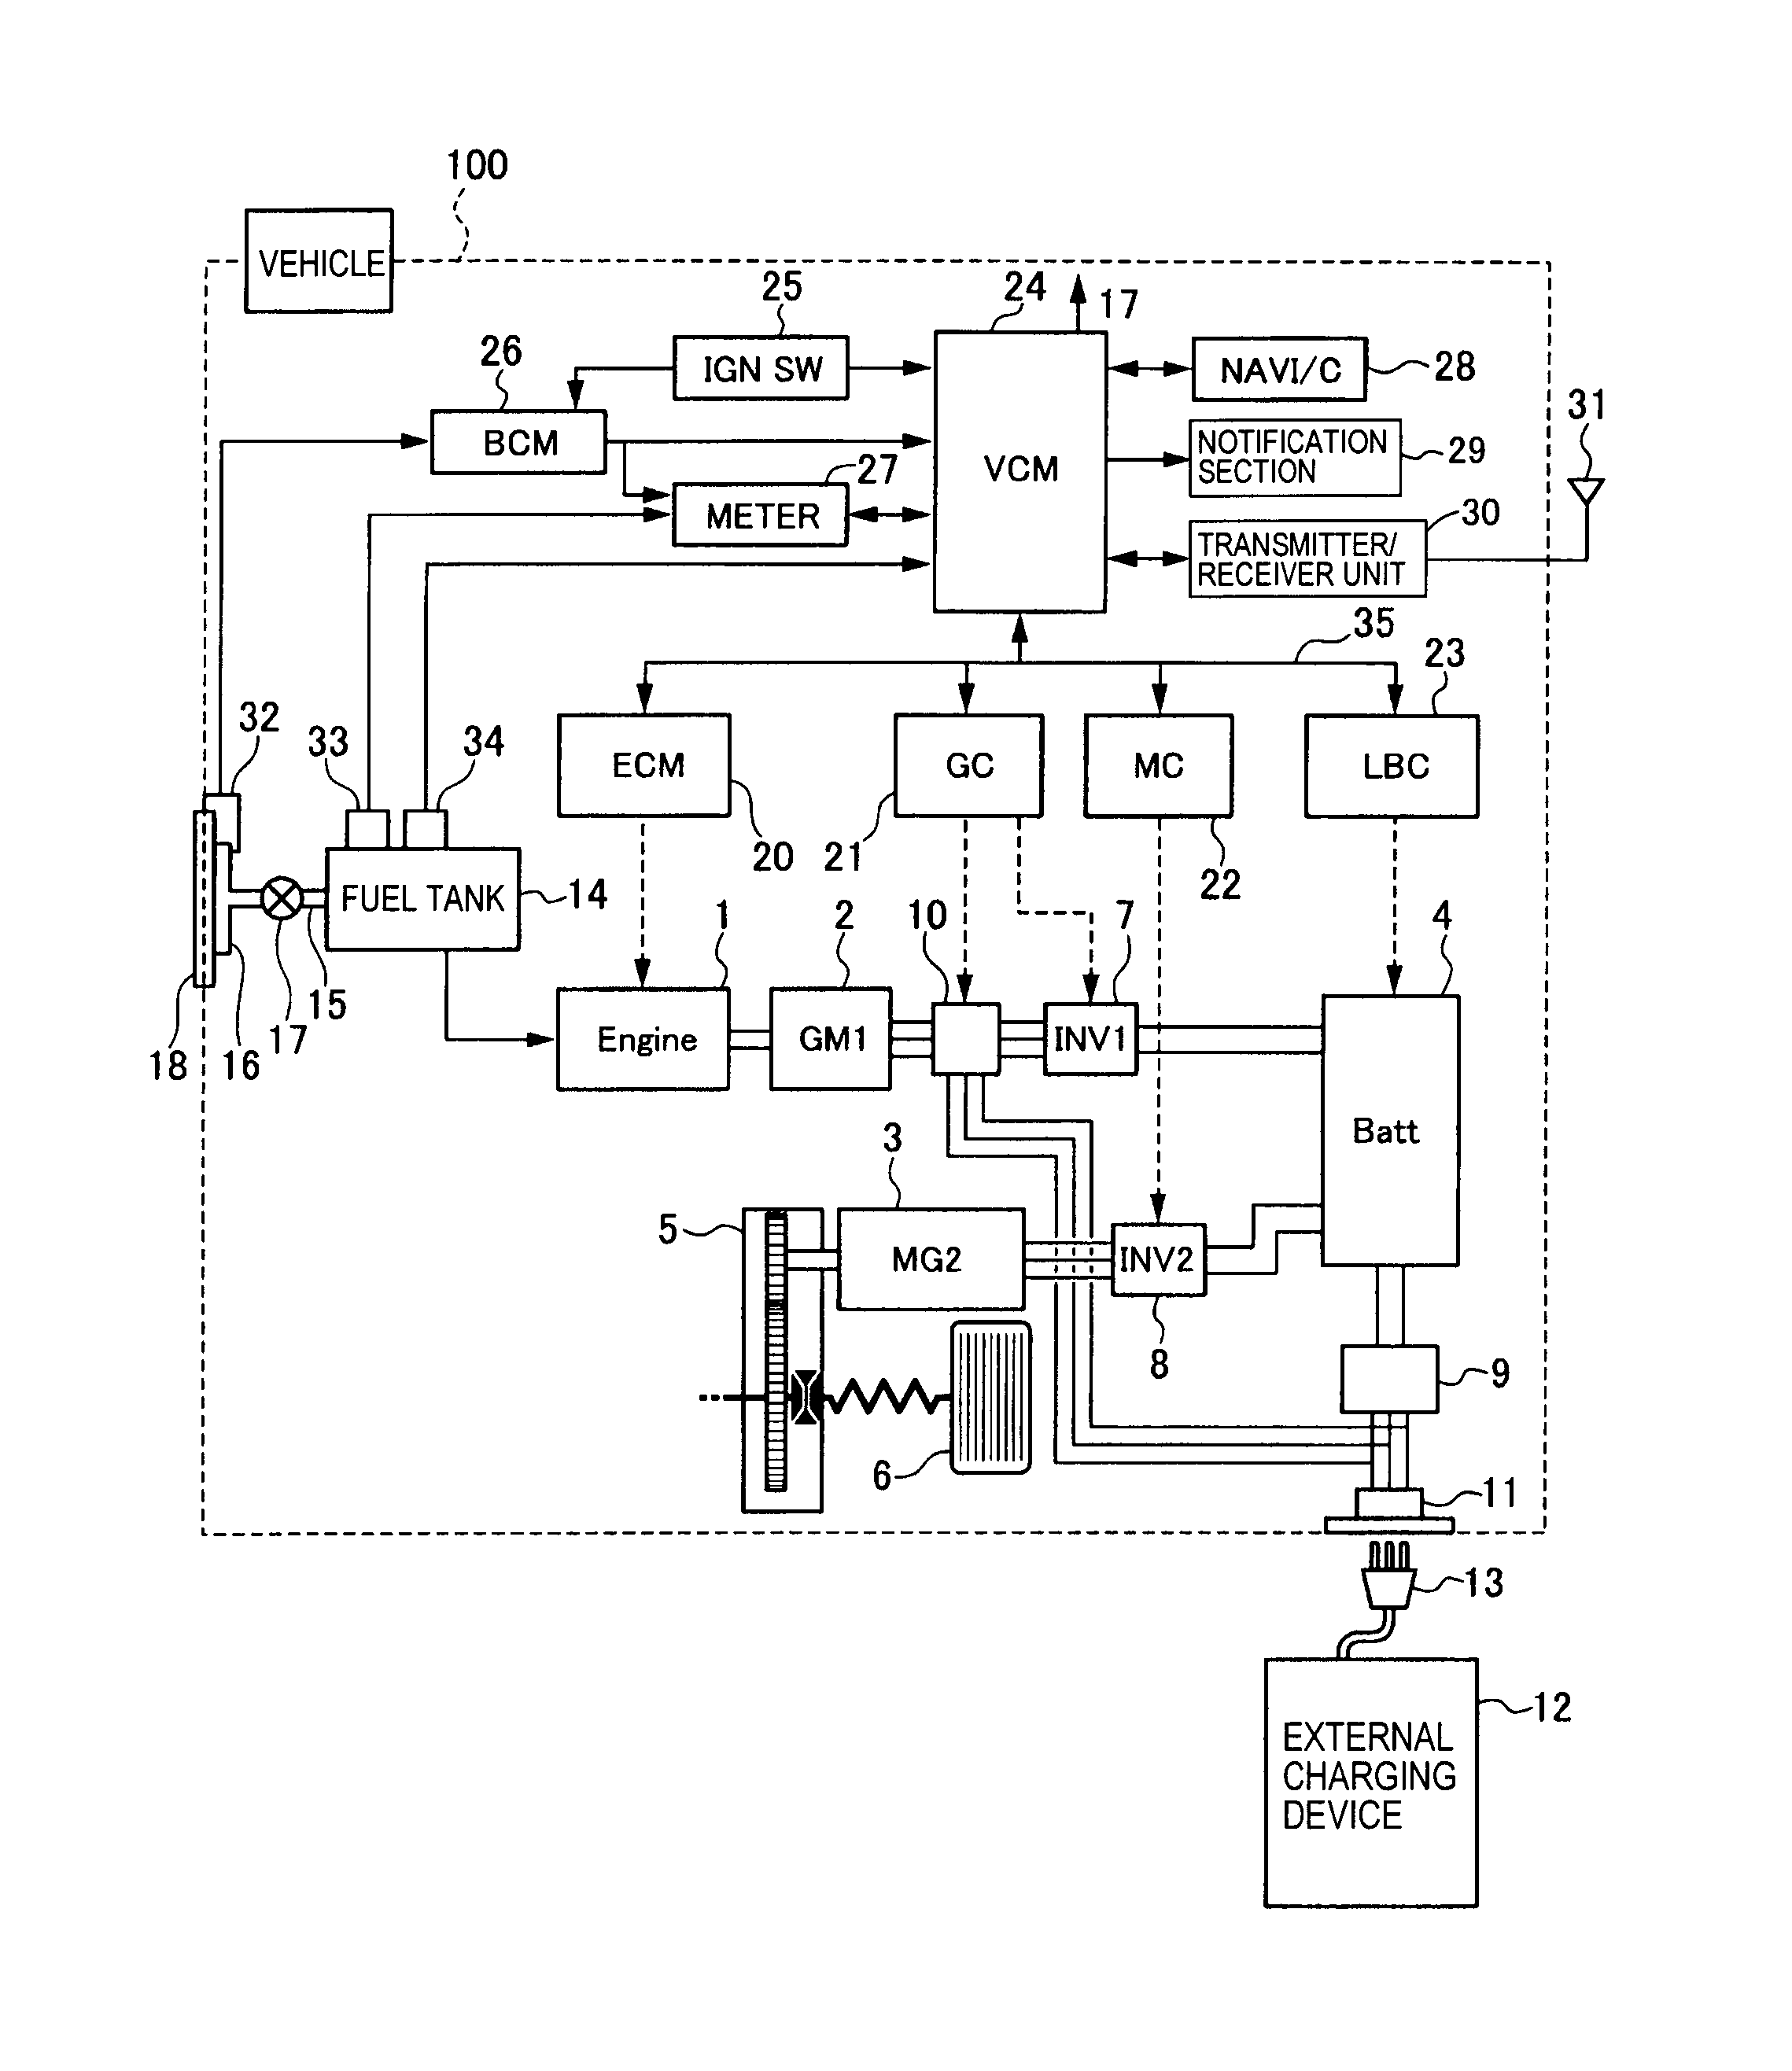 pixhawk 2.1 wiring diagram